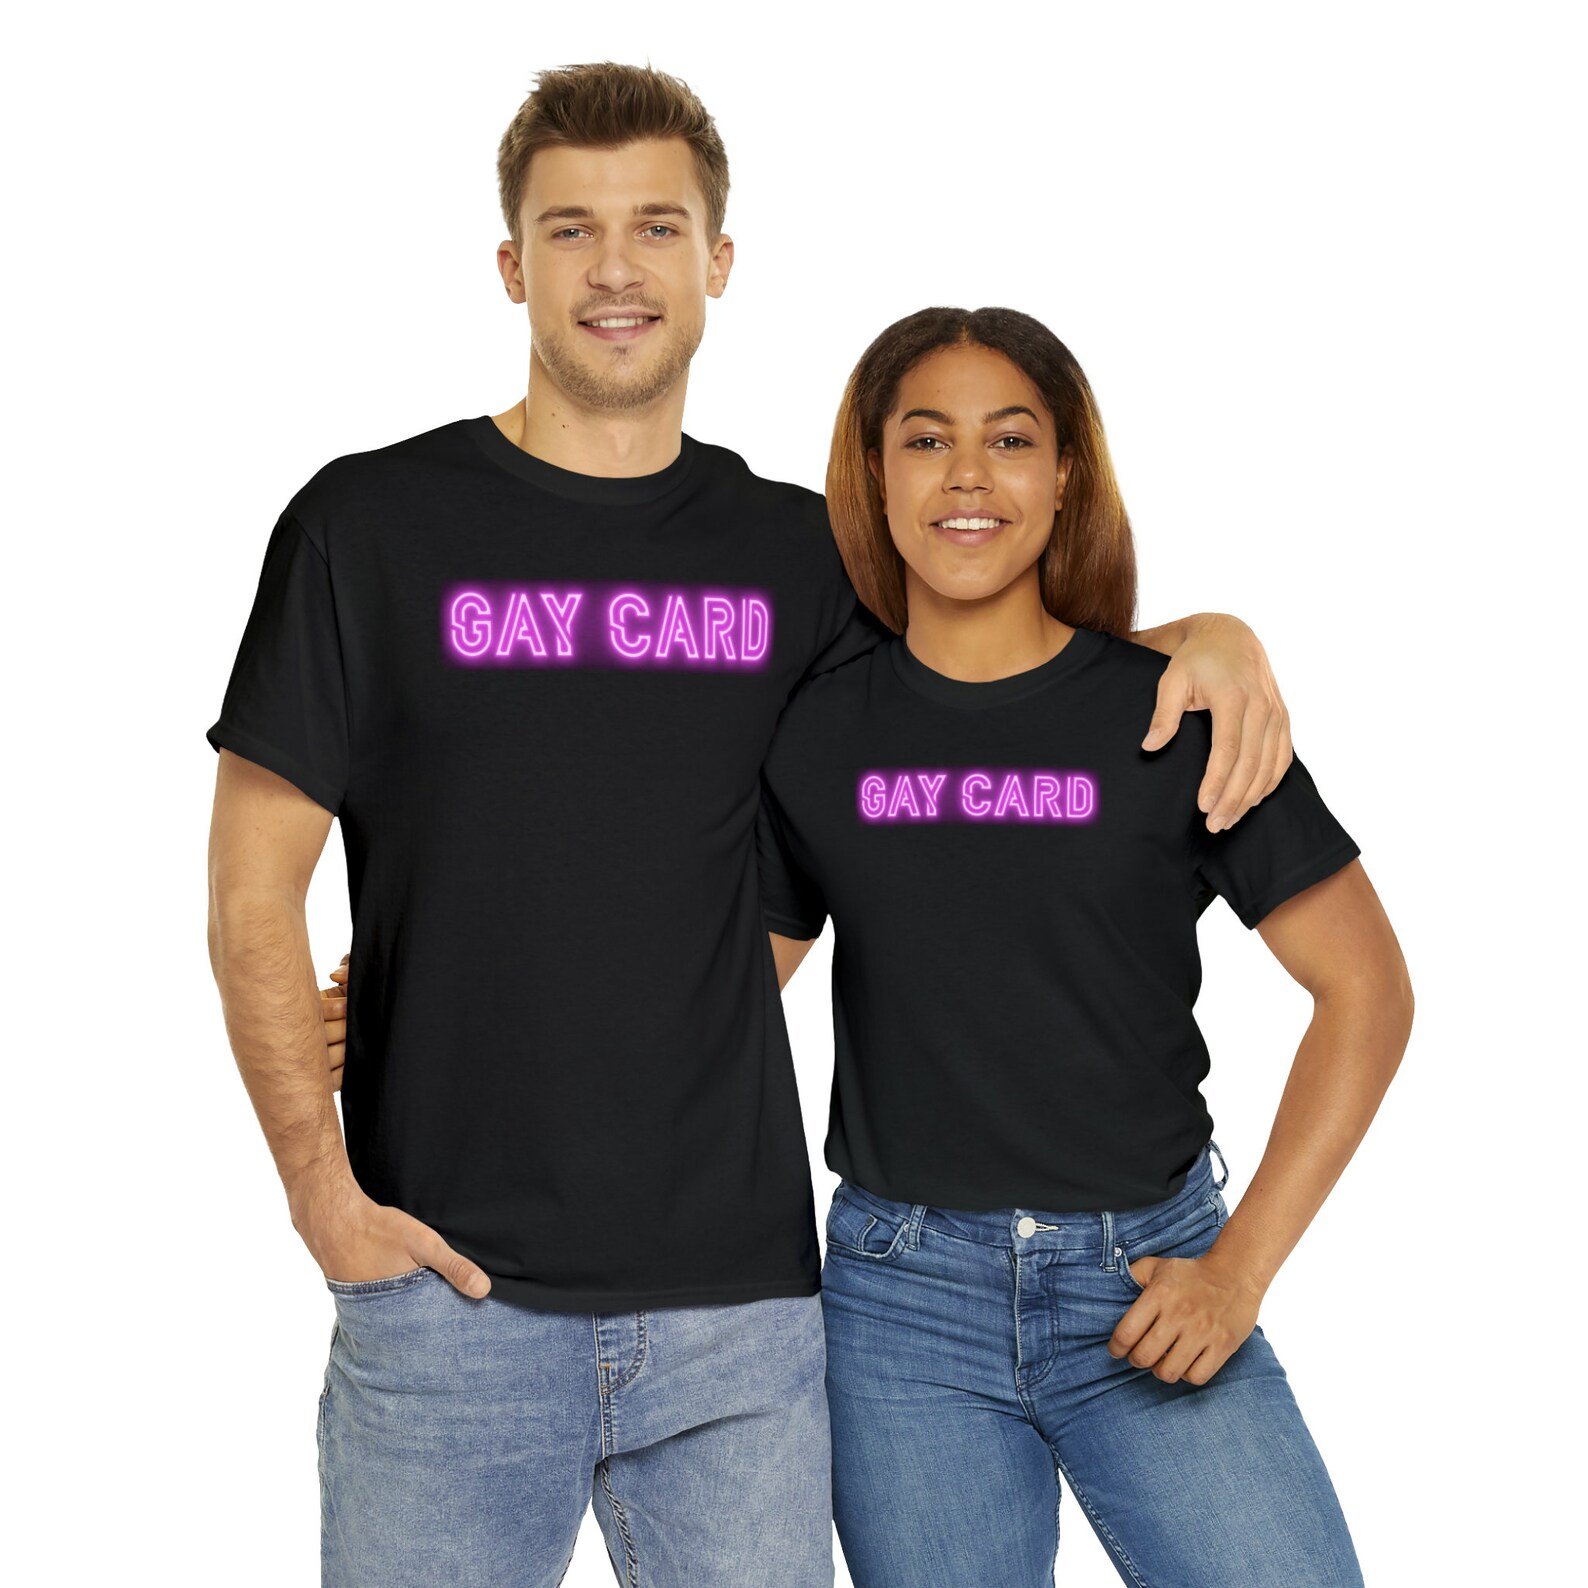 GAY CARD